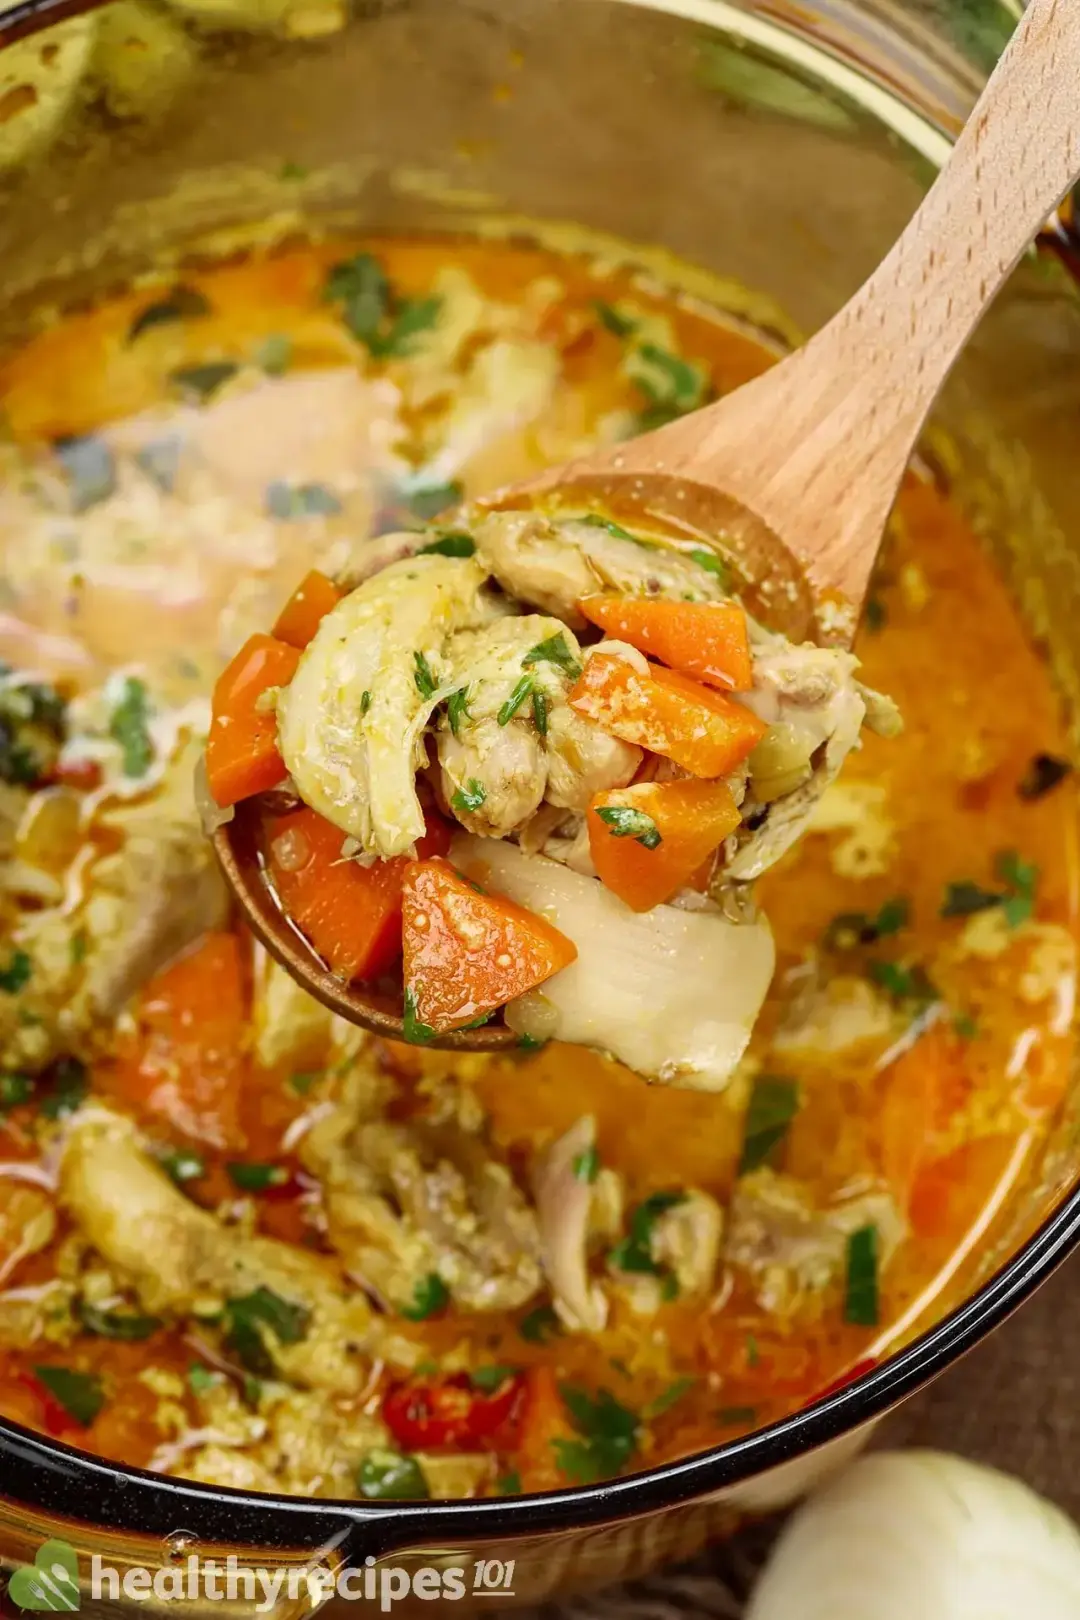 What Makes Our Thai Noodle Soup Different